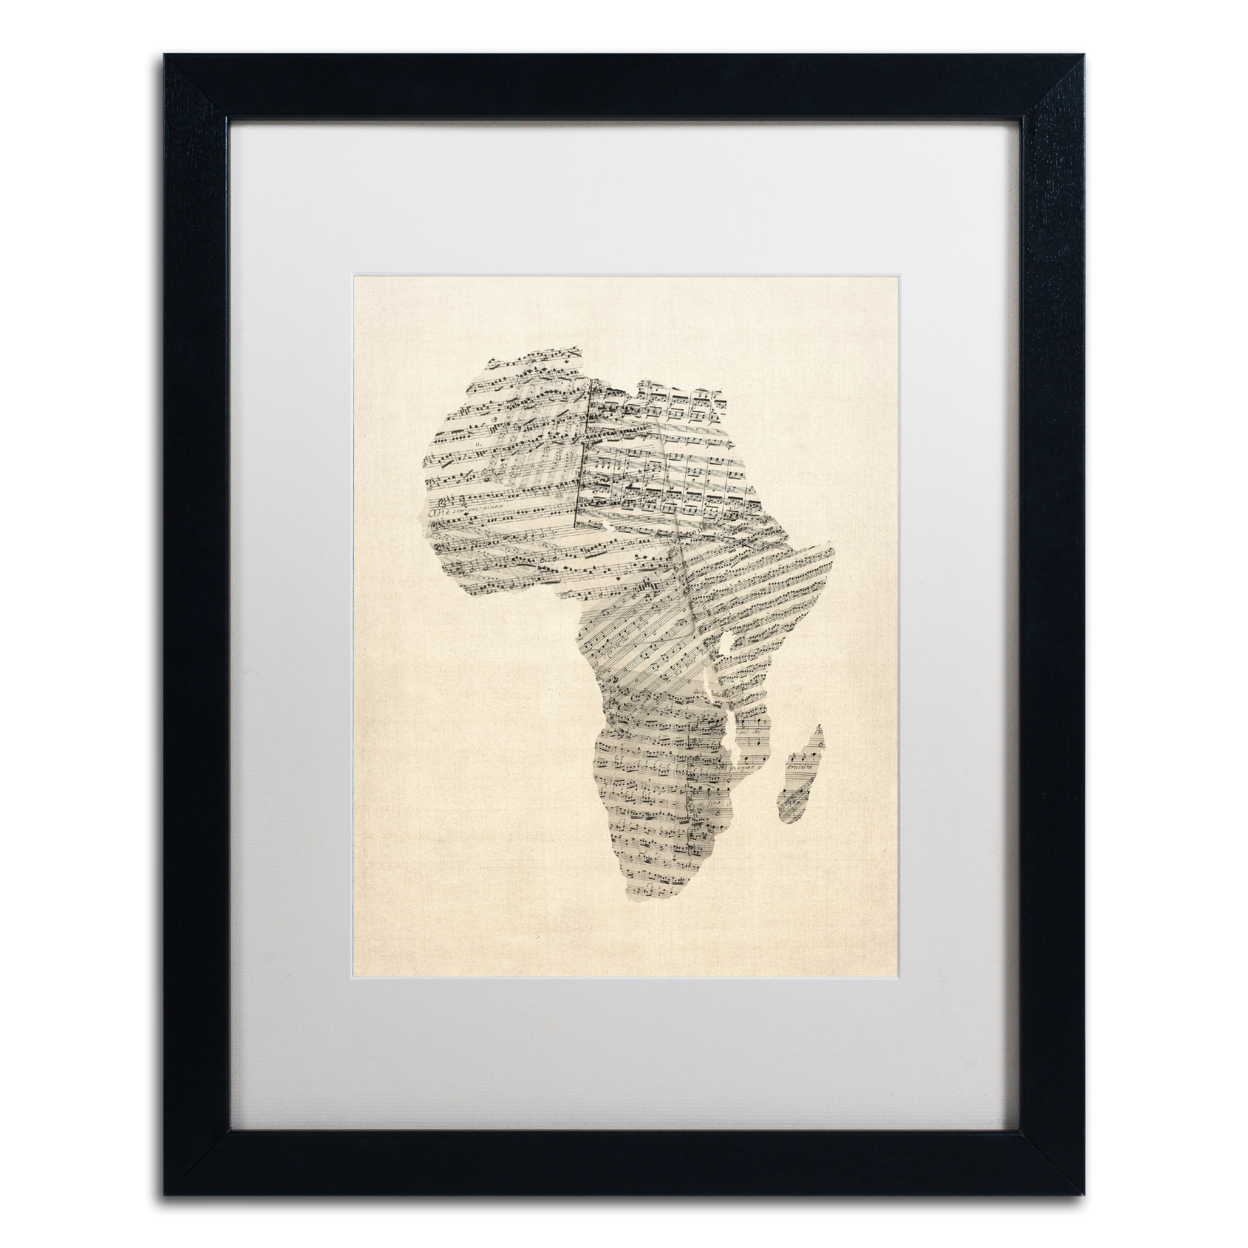 Michael Tompsett 'Old Sheet Music Map Of Africa' Black Wooden Framed Art 18 X 22 Inches